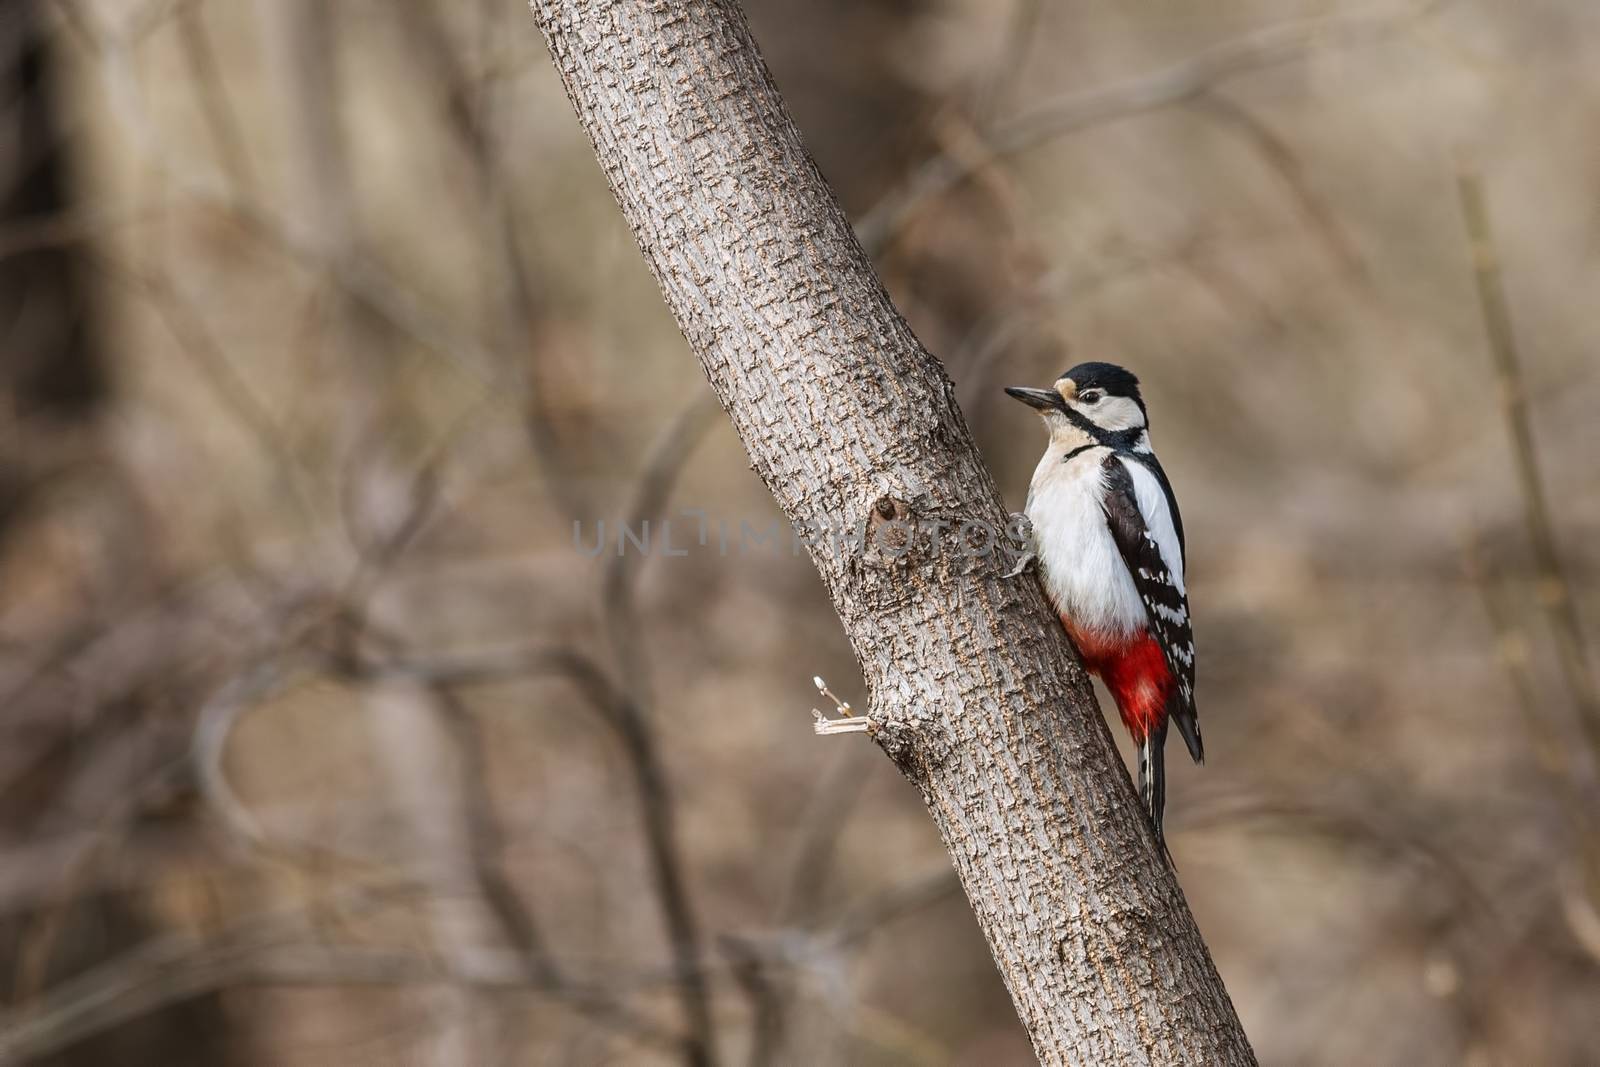 Great spotted woodpecker by Ohotnik